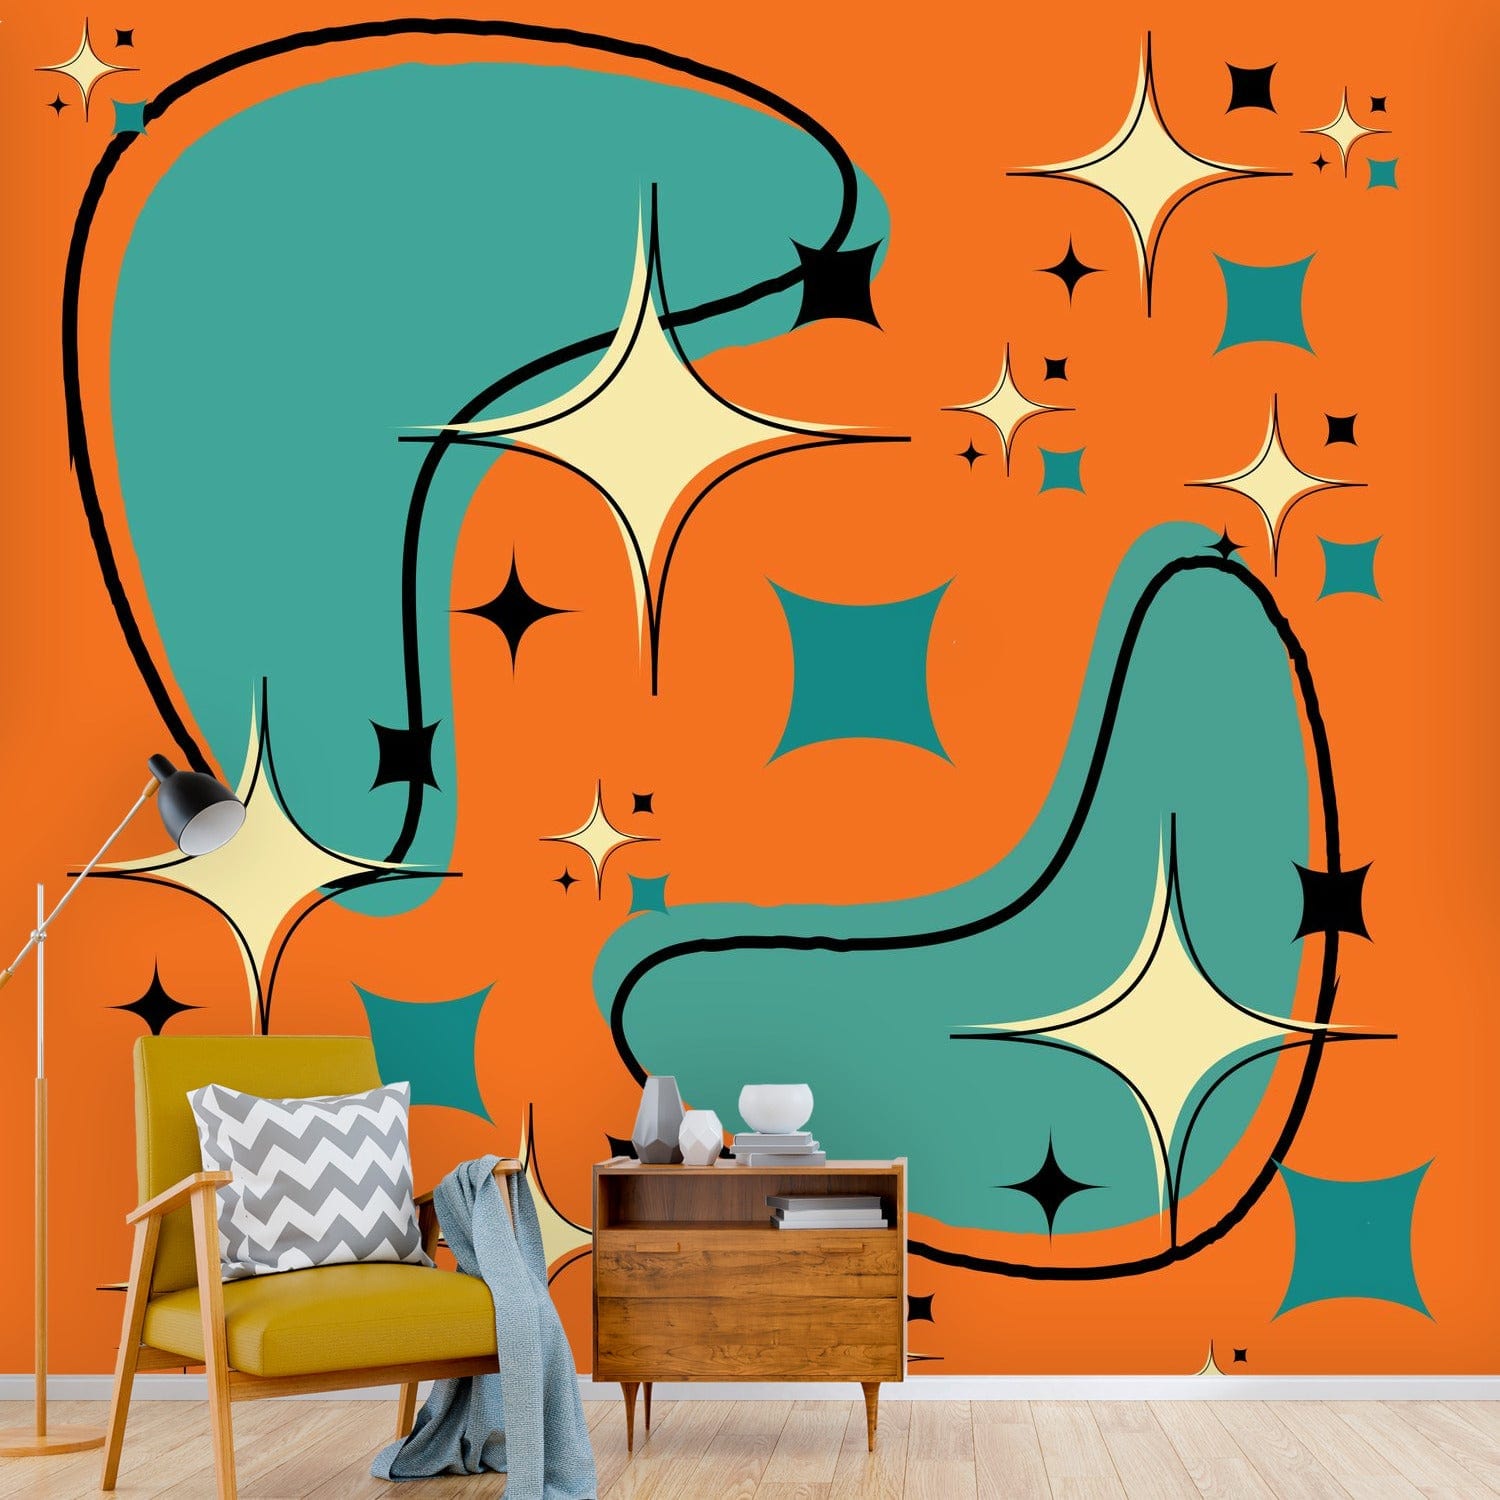 Mid Century Modern, Atomic Boomerang, Starburst, Teal, Orange Peel And Stick Wall Murals Wallpaper H110 x W120